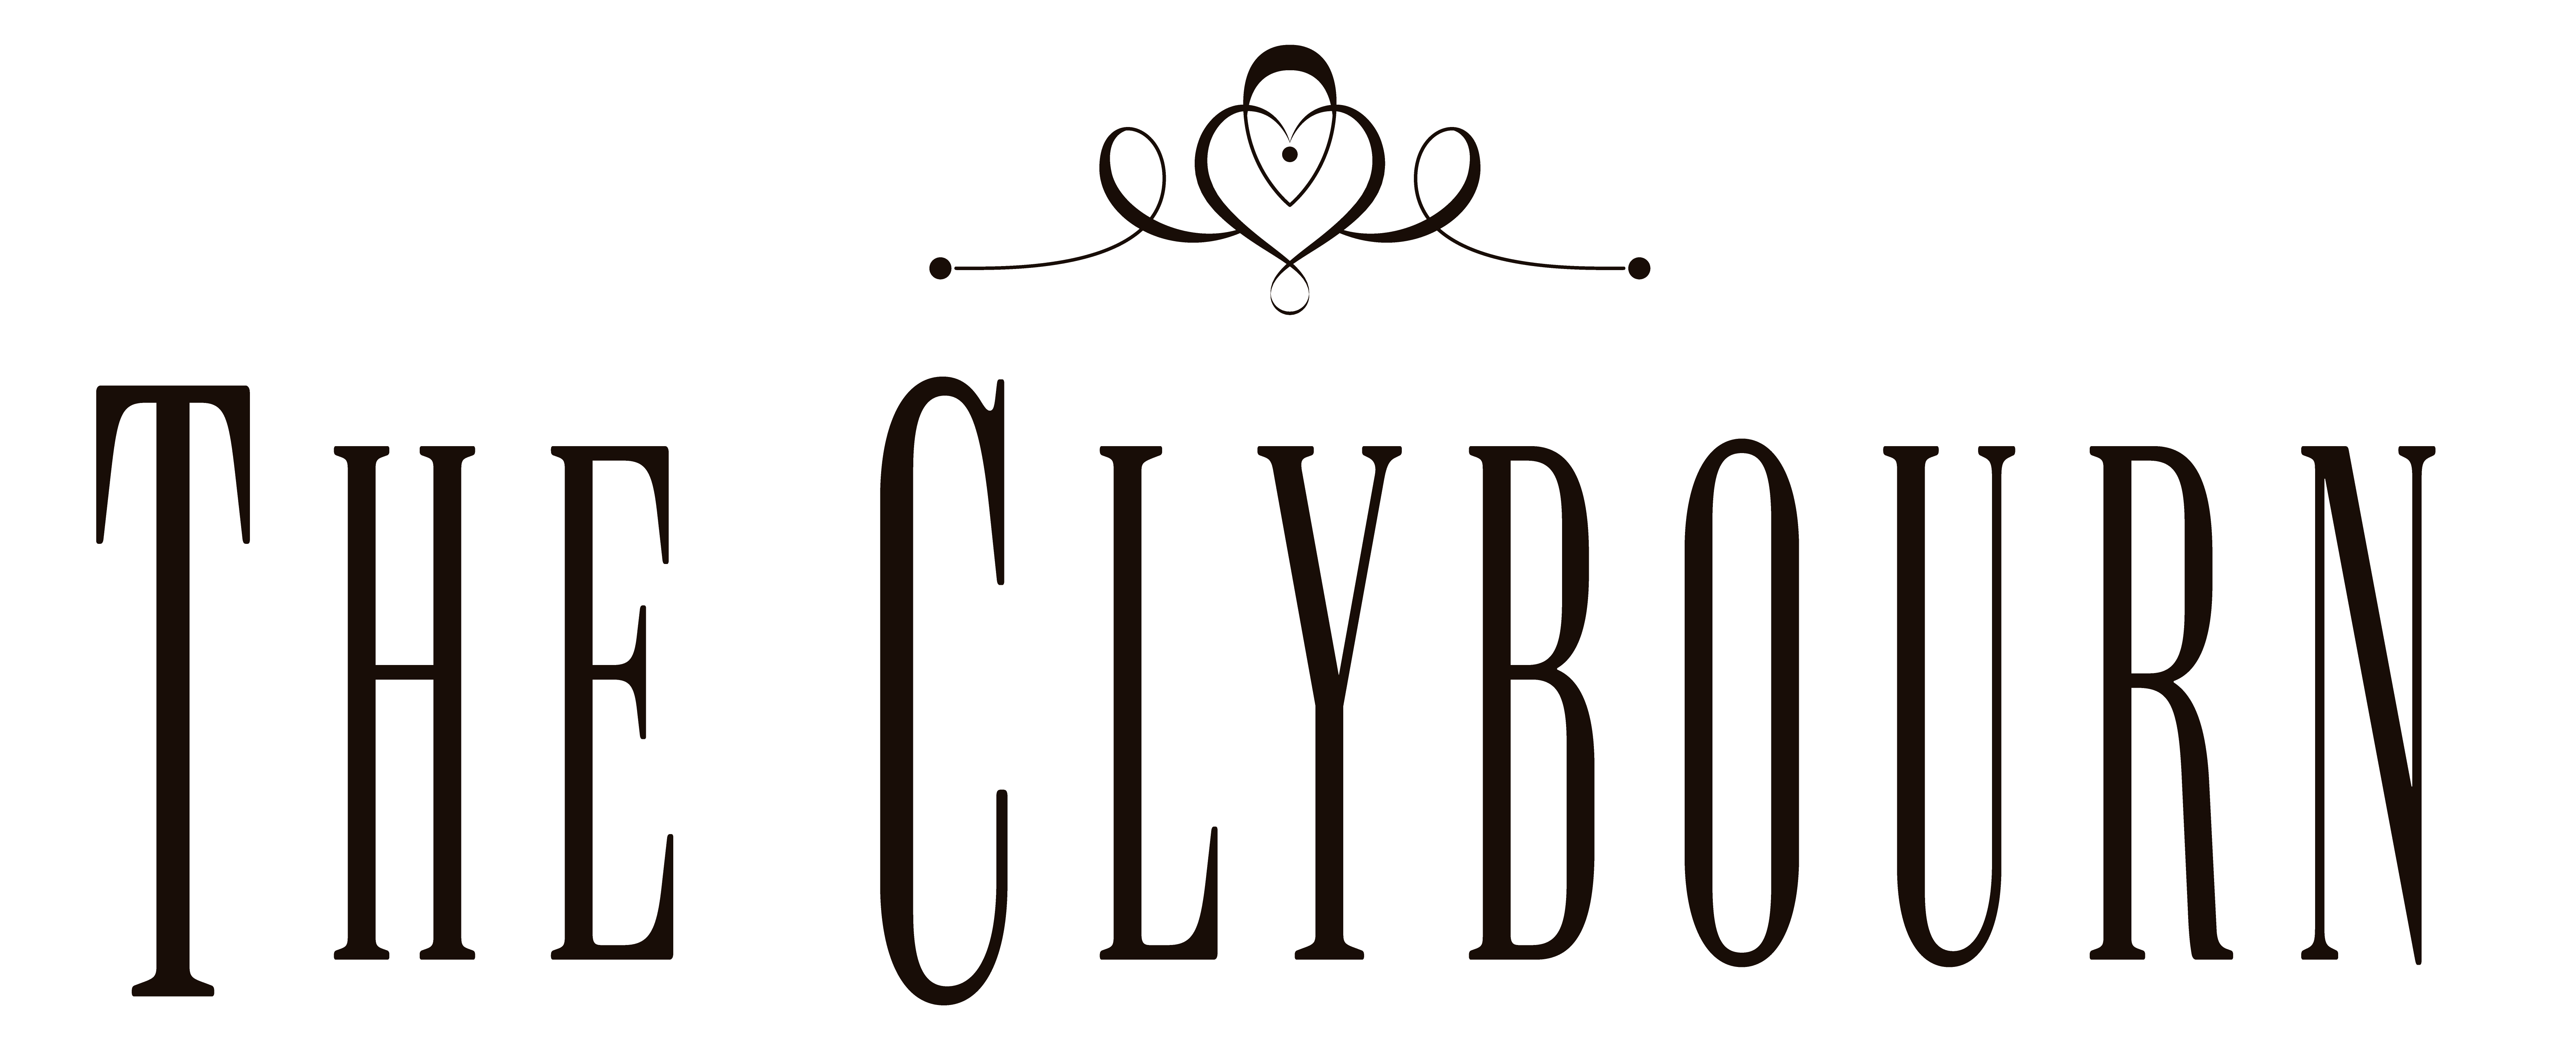 The Clybourn Logo